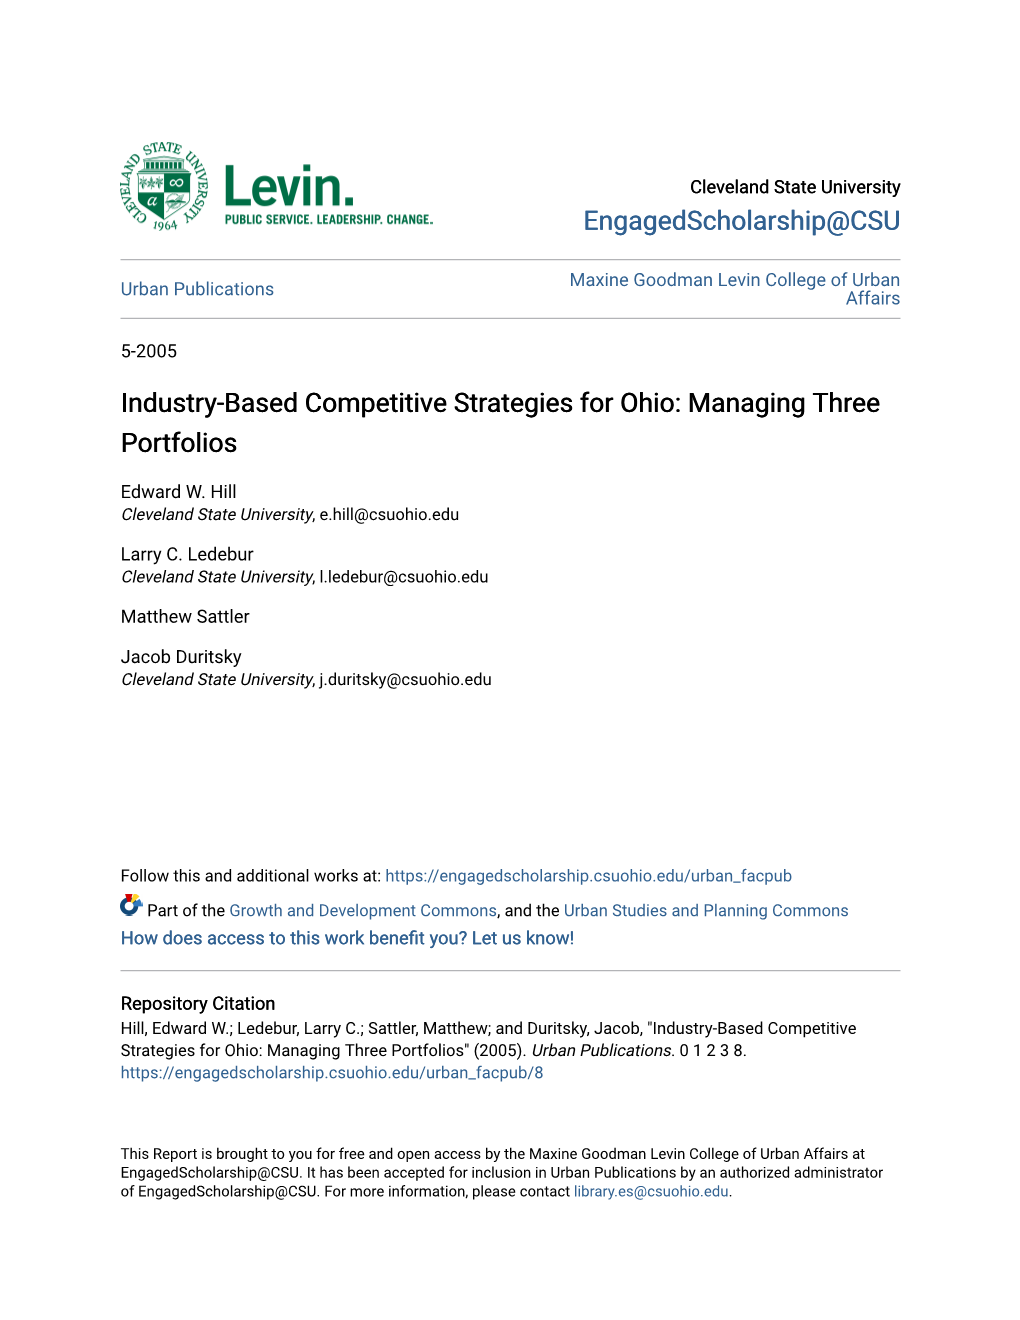 Industry-Based Competitive Strategies for Ohio: Managing Three Portfolios